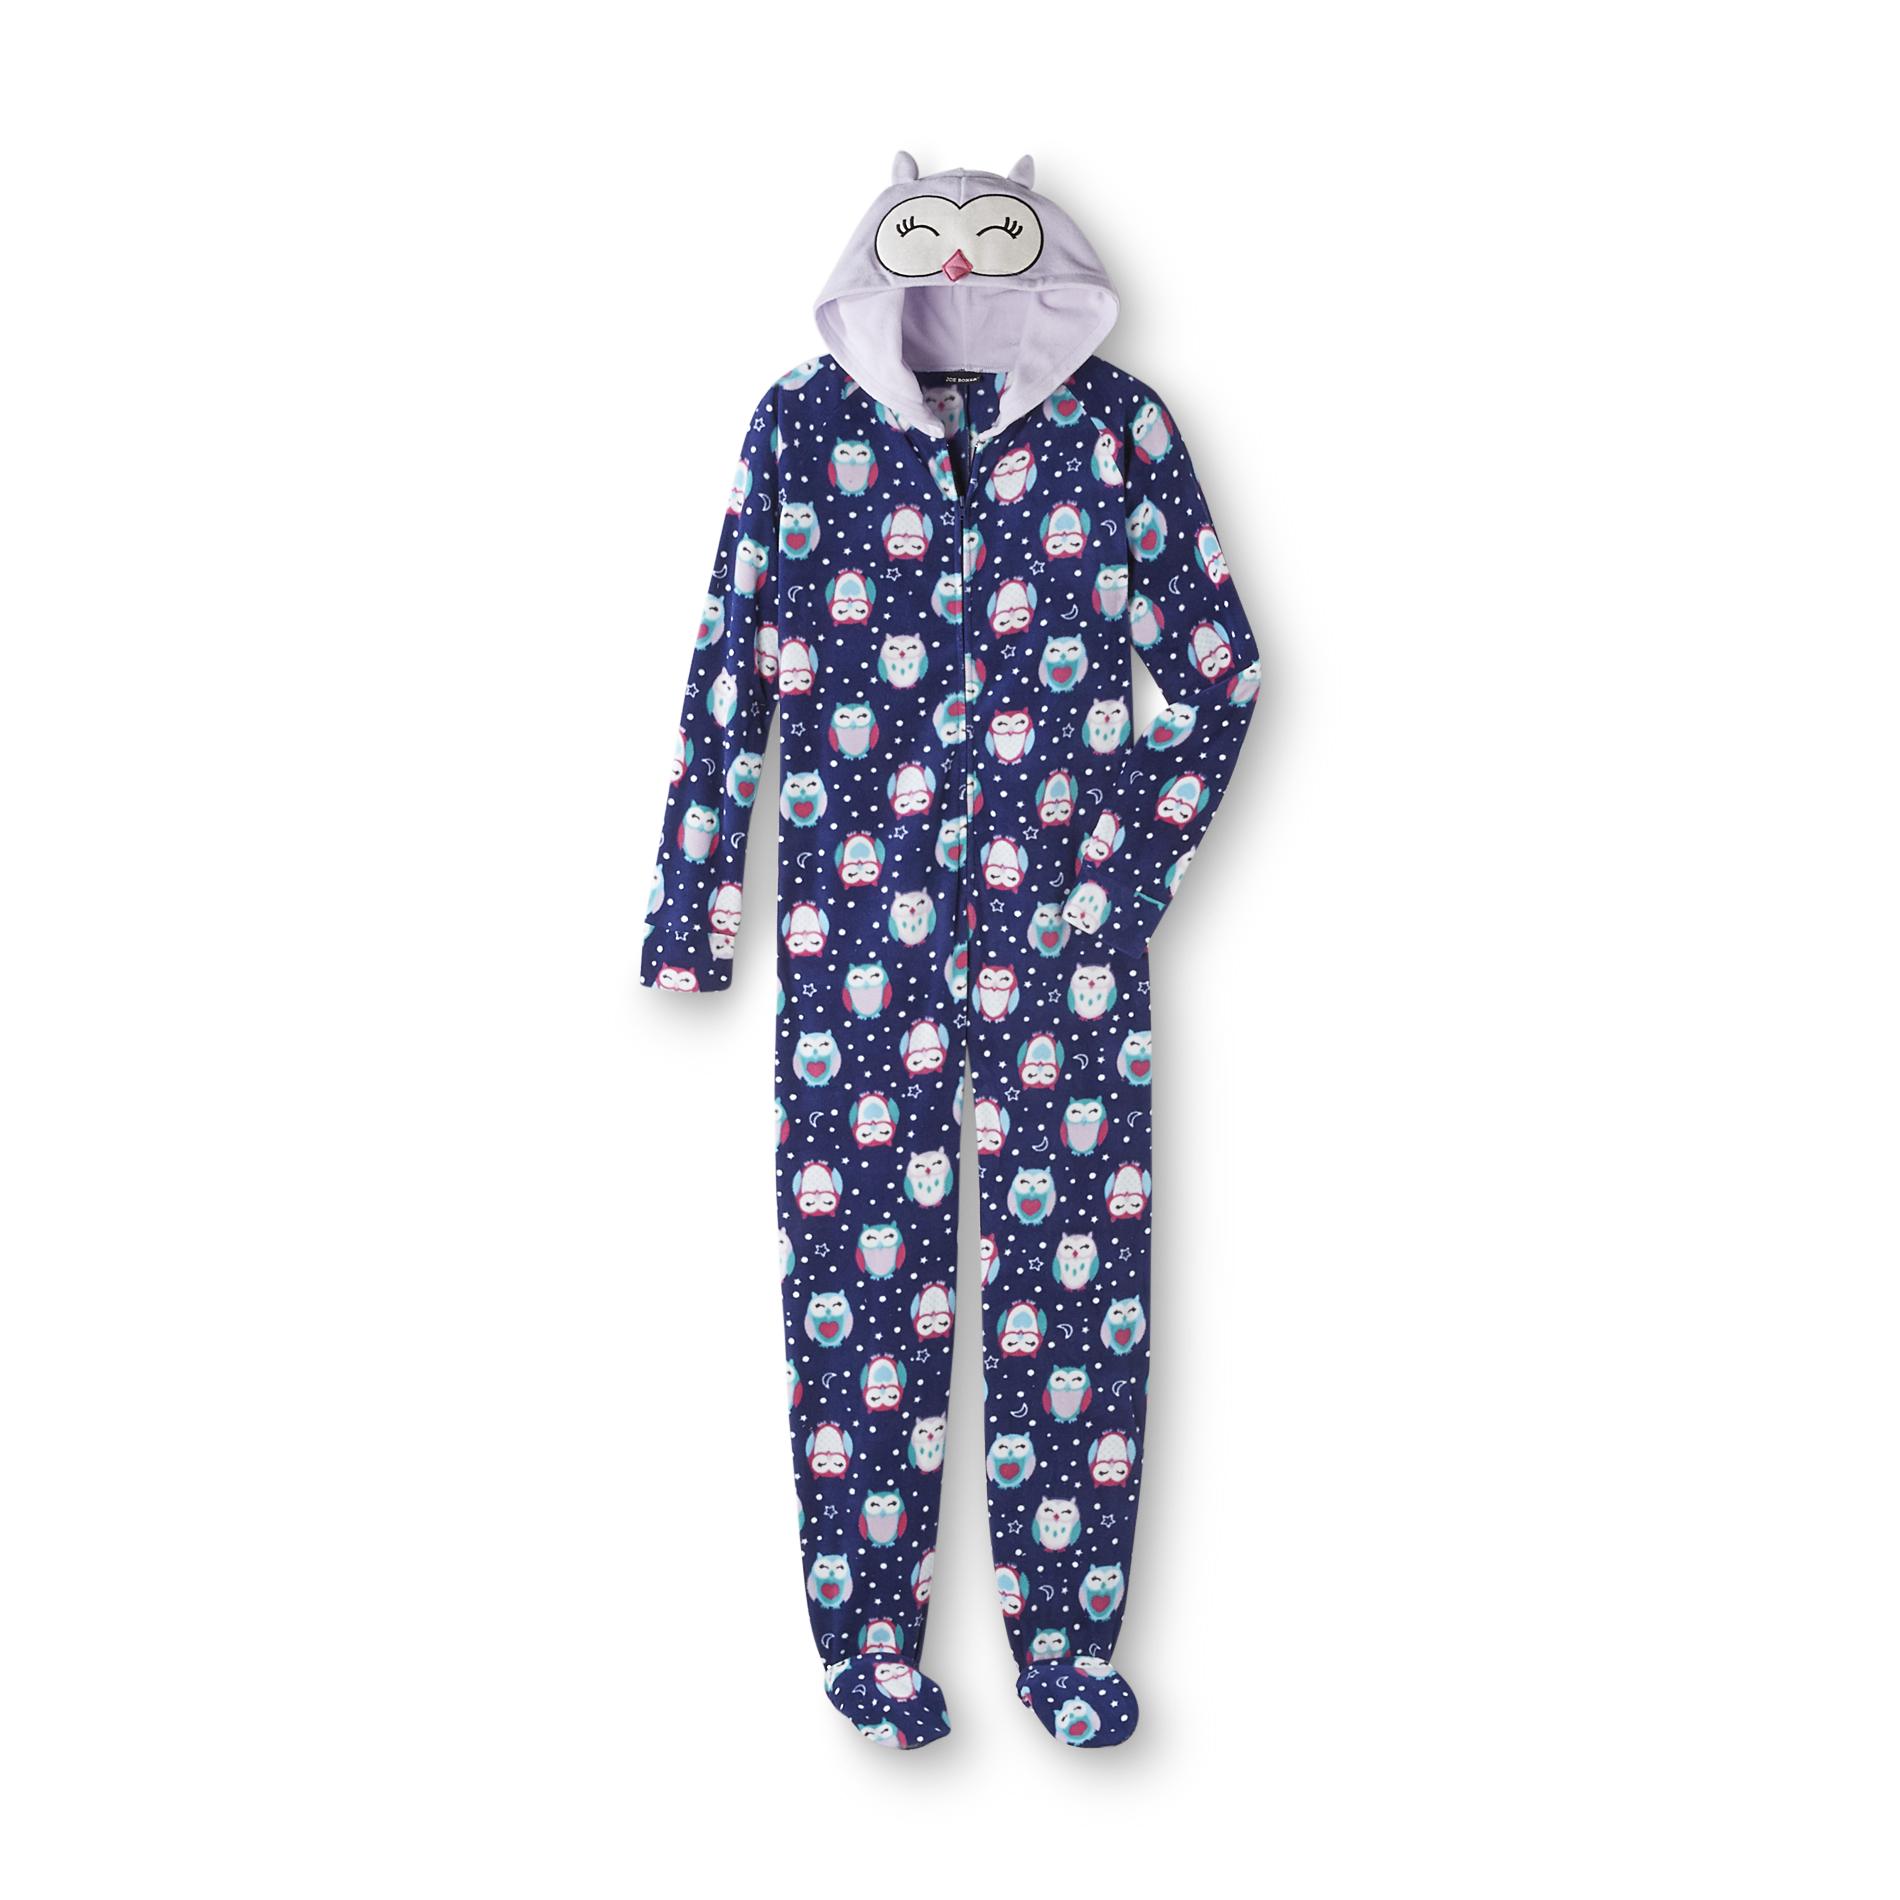 Joe Boxer Women's Footed Sleeper Pajamas - Owl